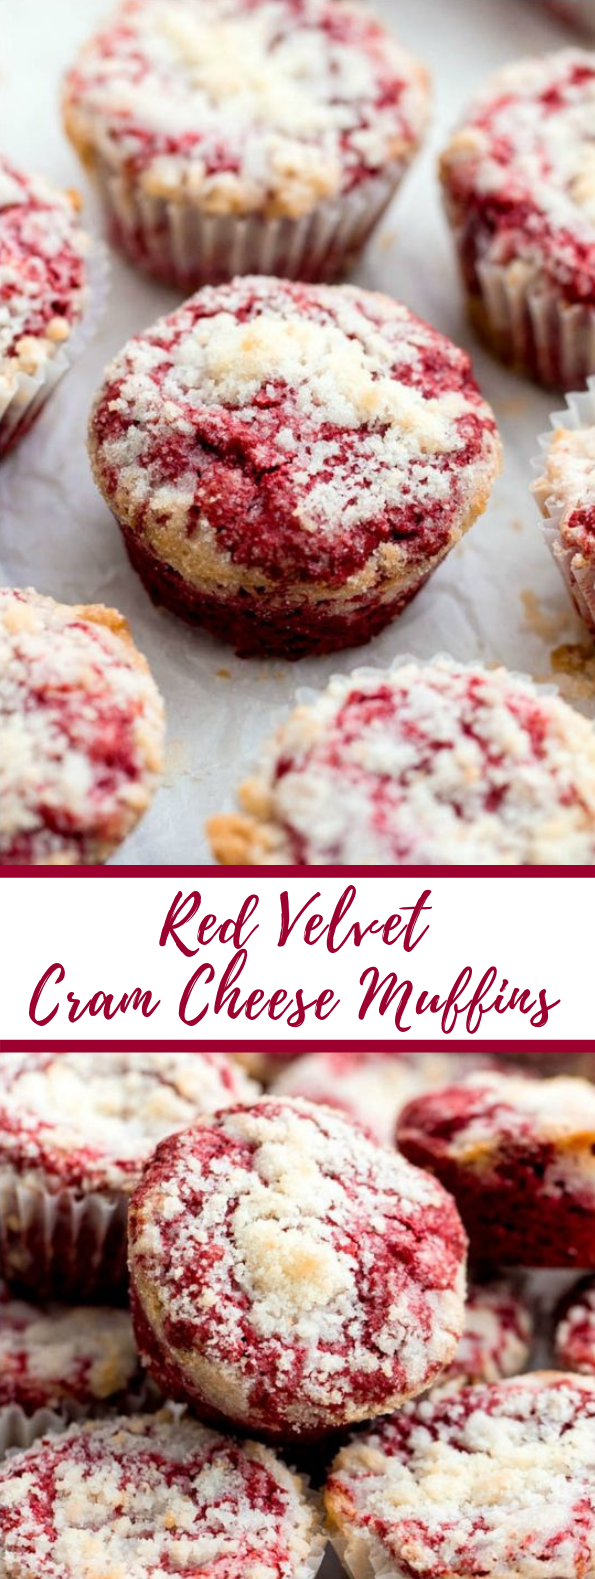 RED VELVET CREAM CHEESE MUFFINS #desserts #cakes